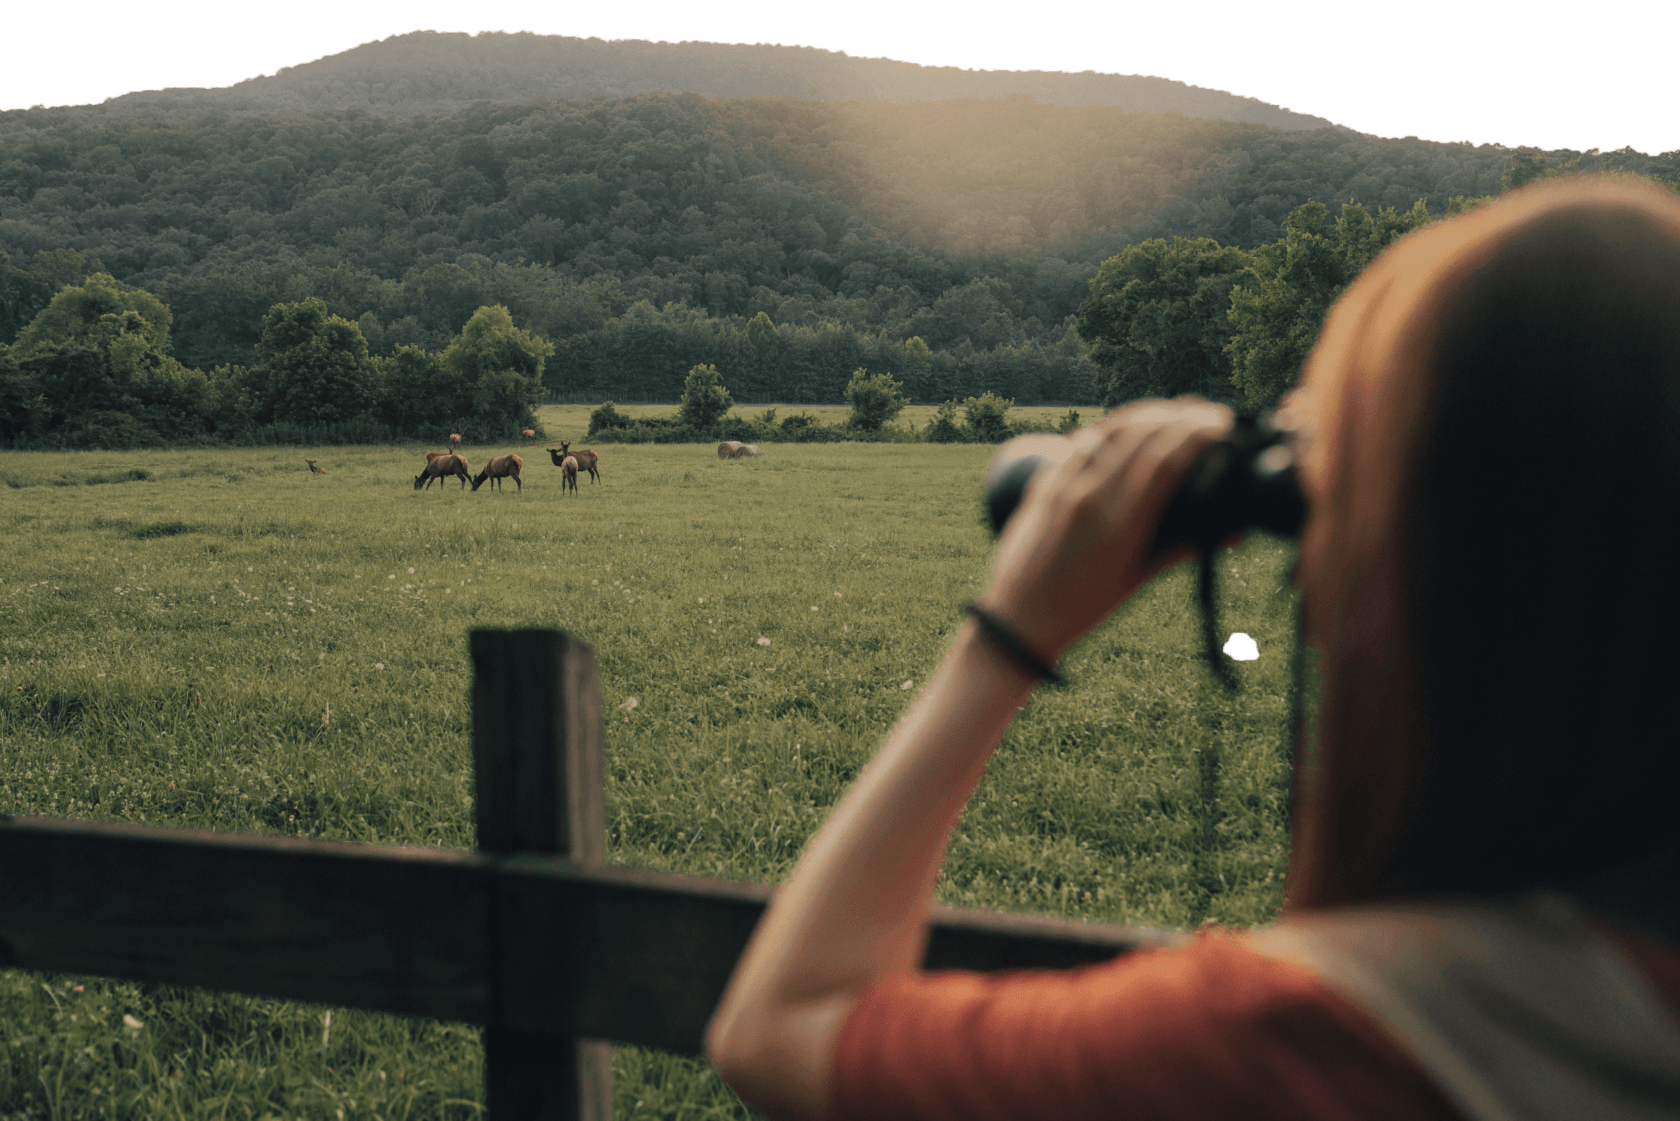 Young girl using binoculars to view wildlife